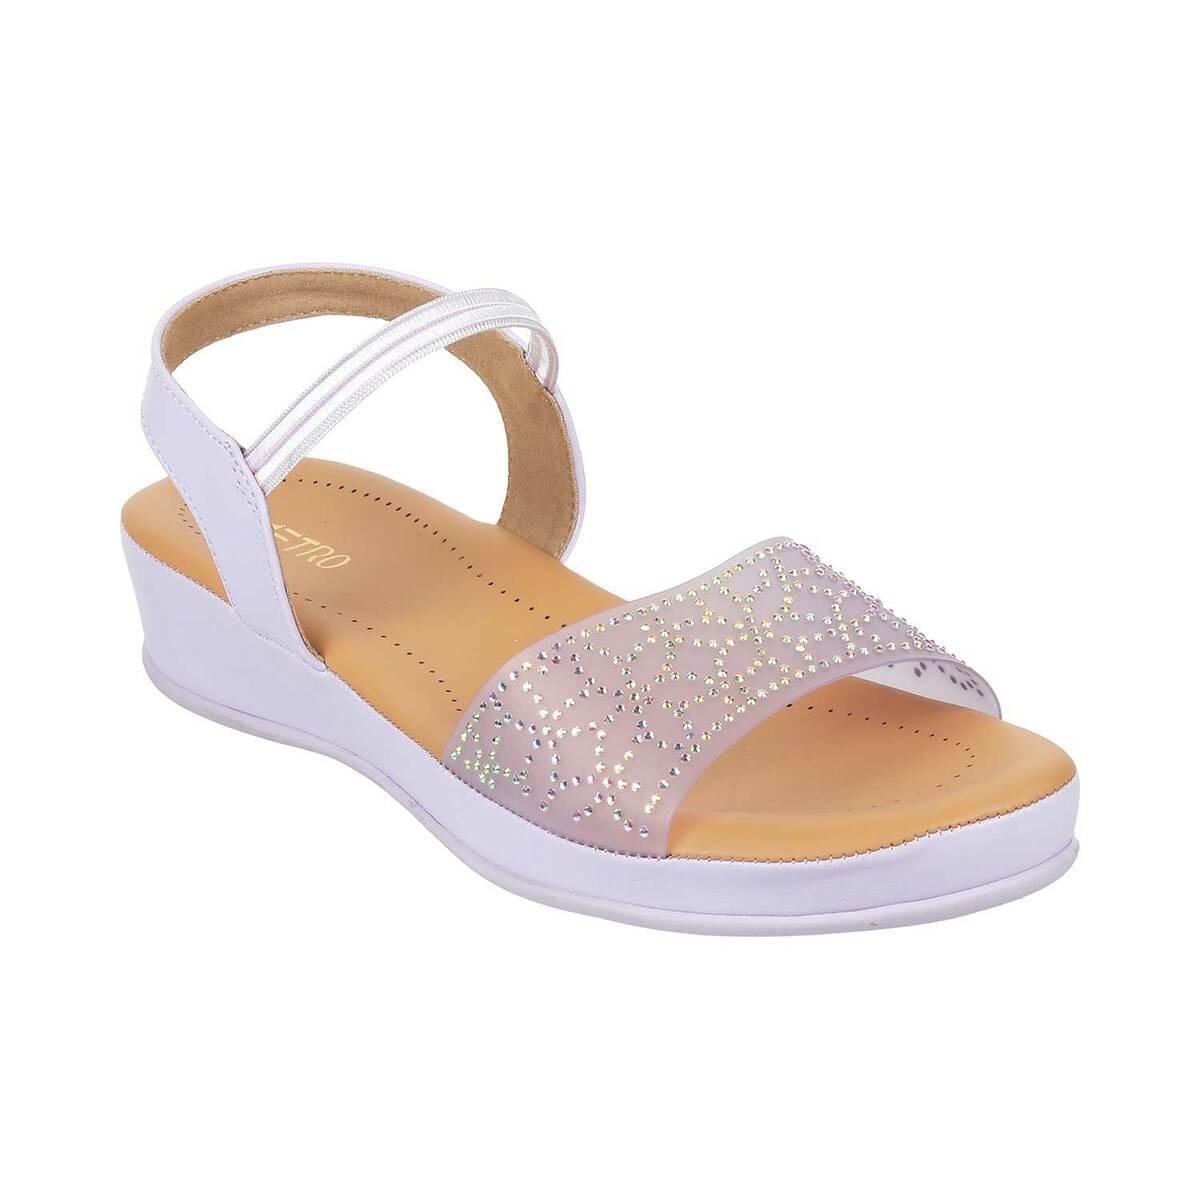 Buy Women Tan Casual Sandals Online | SKU: 33-1503-23-36-Metro Shoes